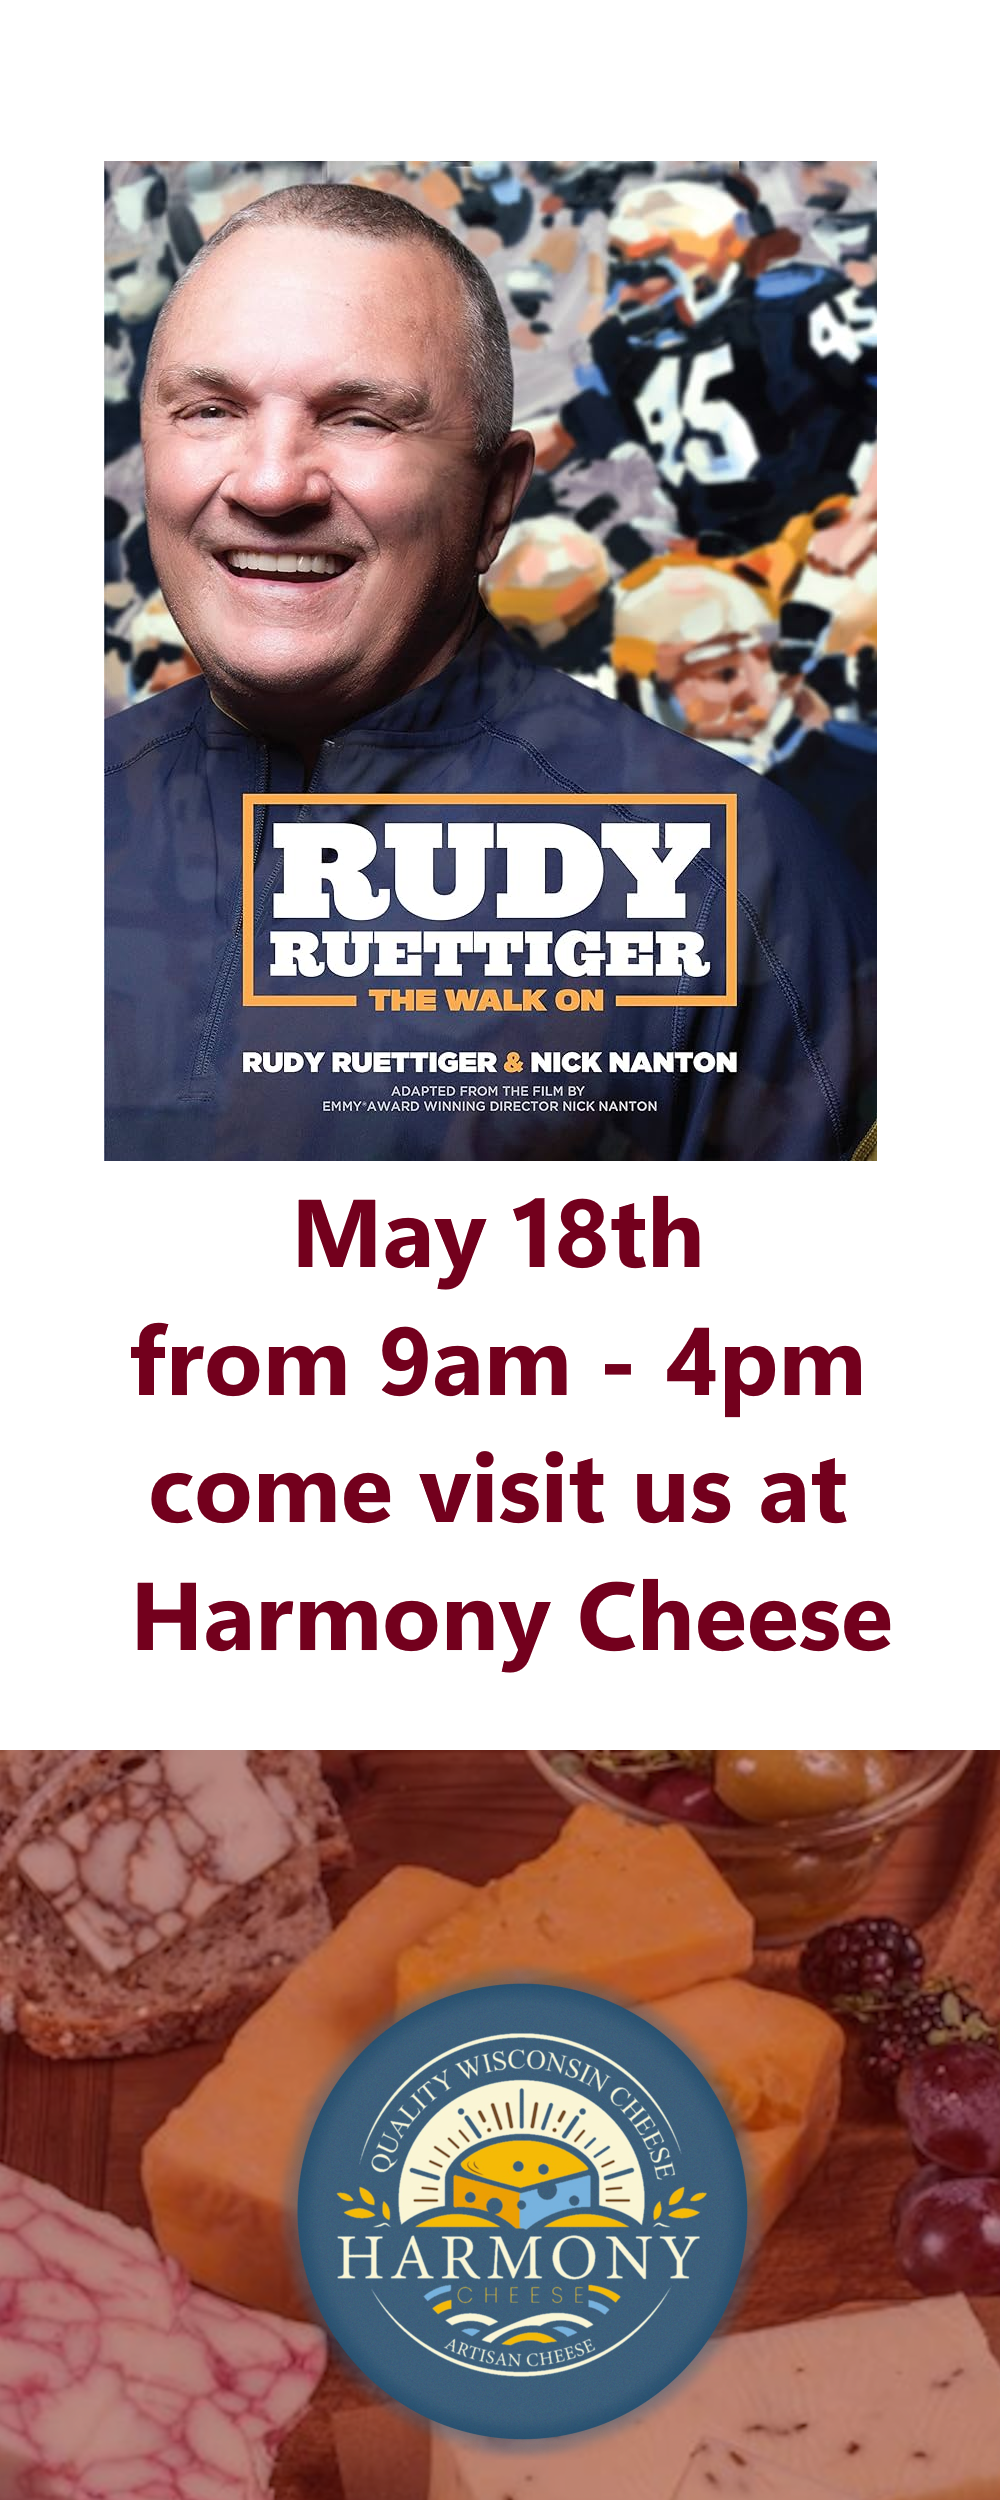 Rudy-Ruettiger-Harmony-Cheese announcement